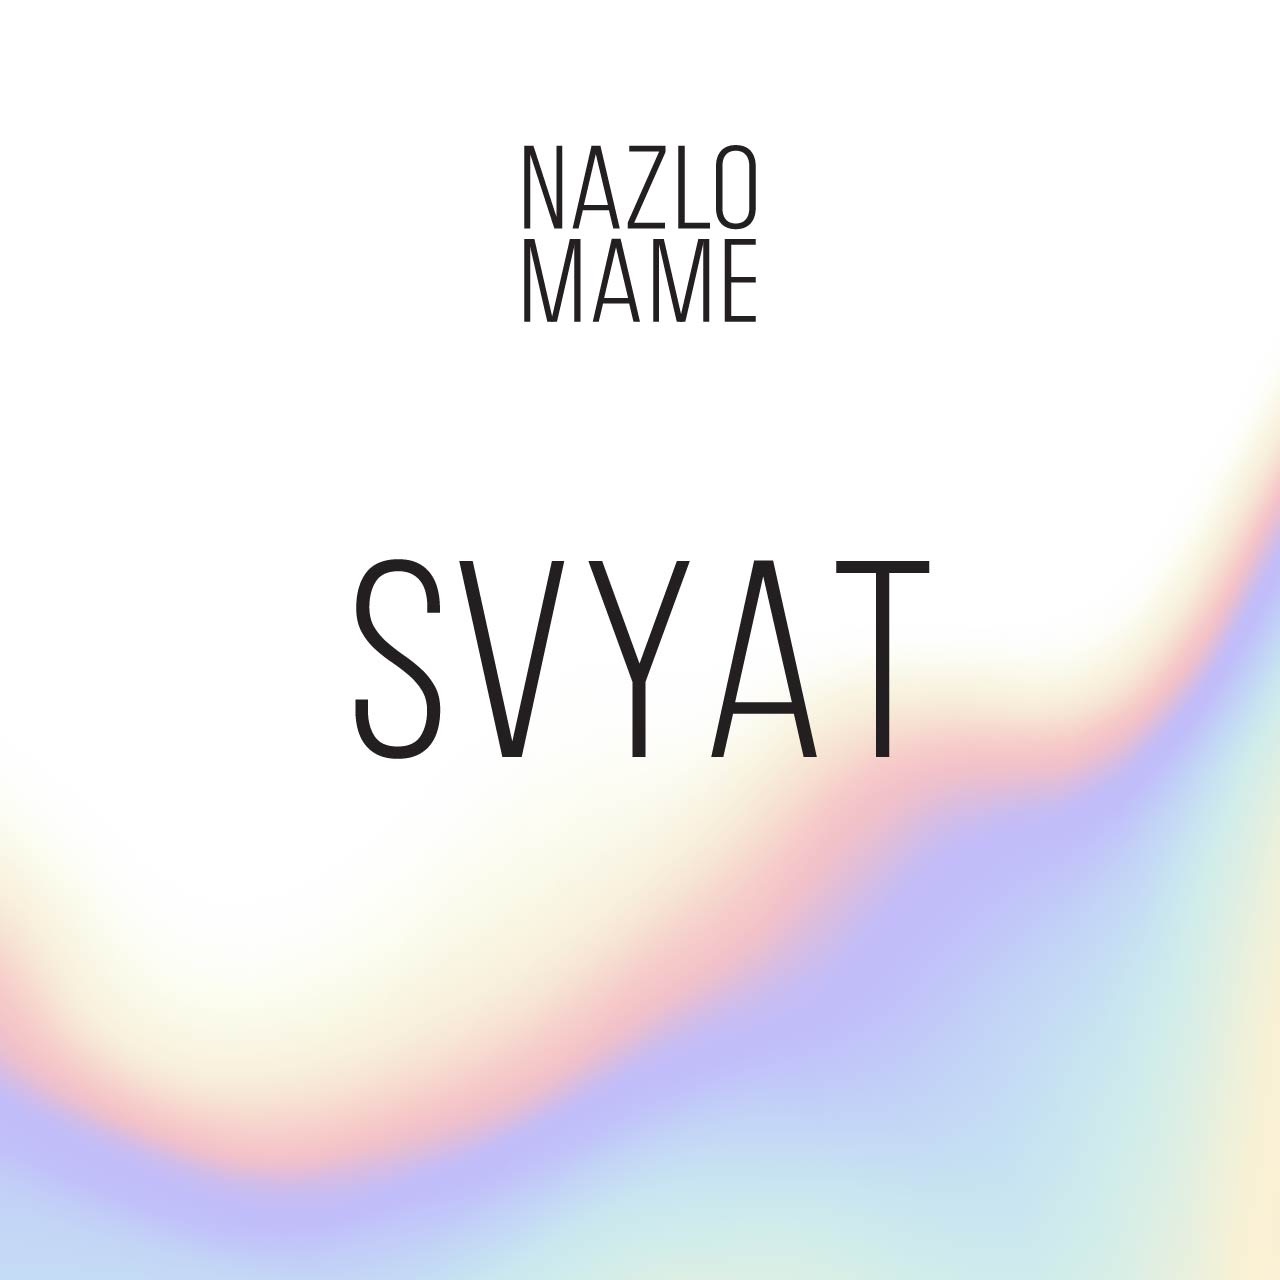 डाउनलोड करा NAZLO MAME // Mutabor 23 jul 2022